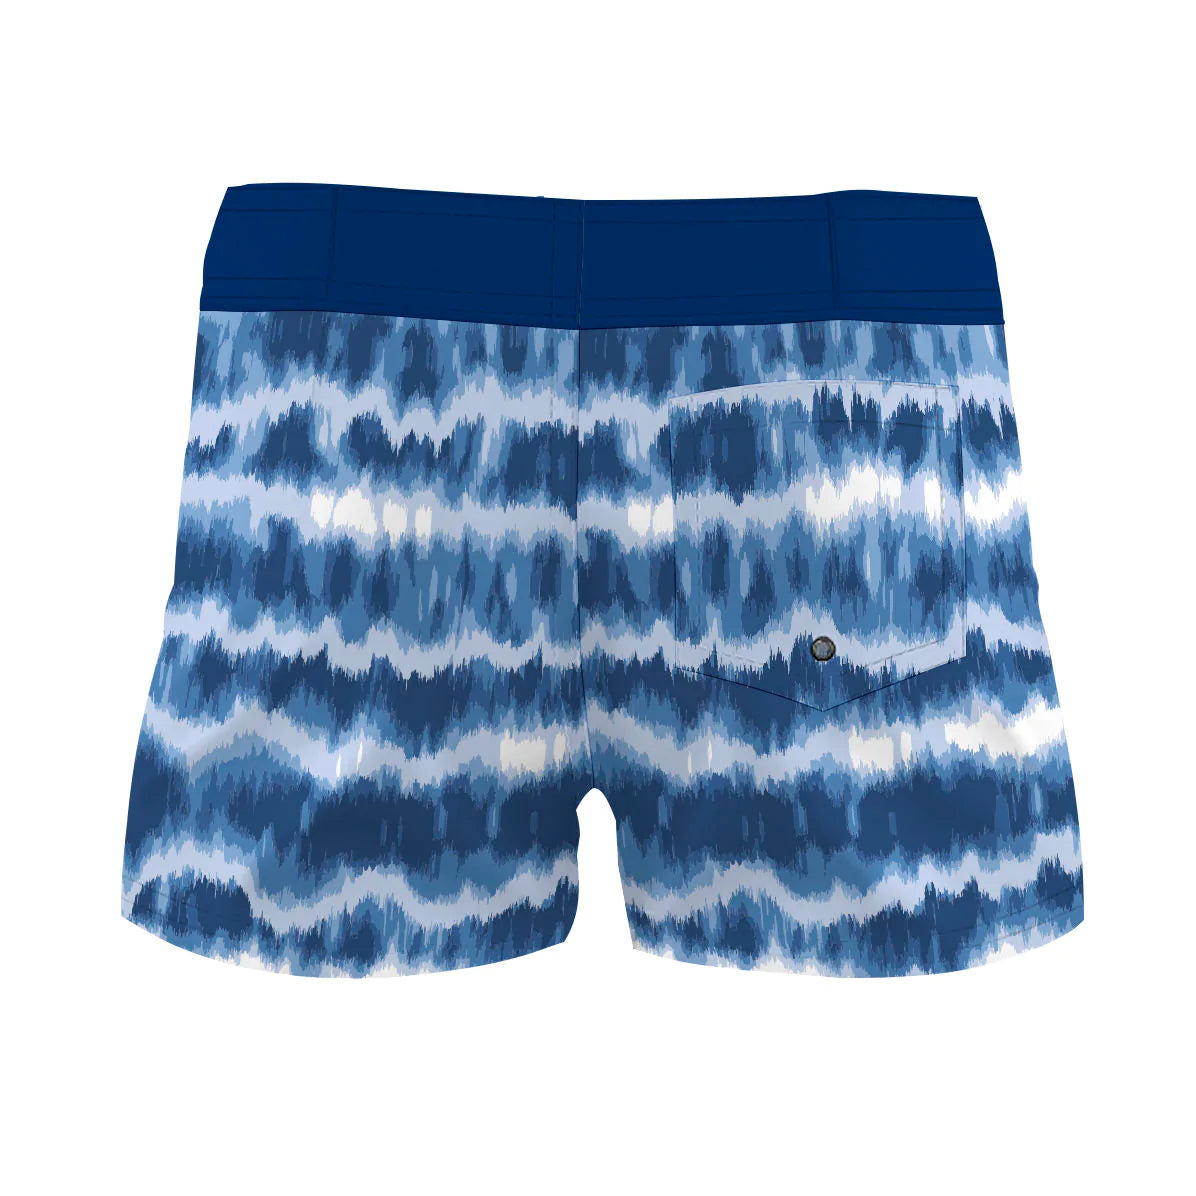 Navy Blue Tye Dye Stripes - Women Board Shorts